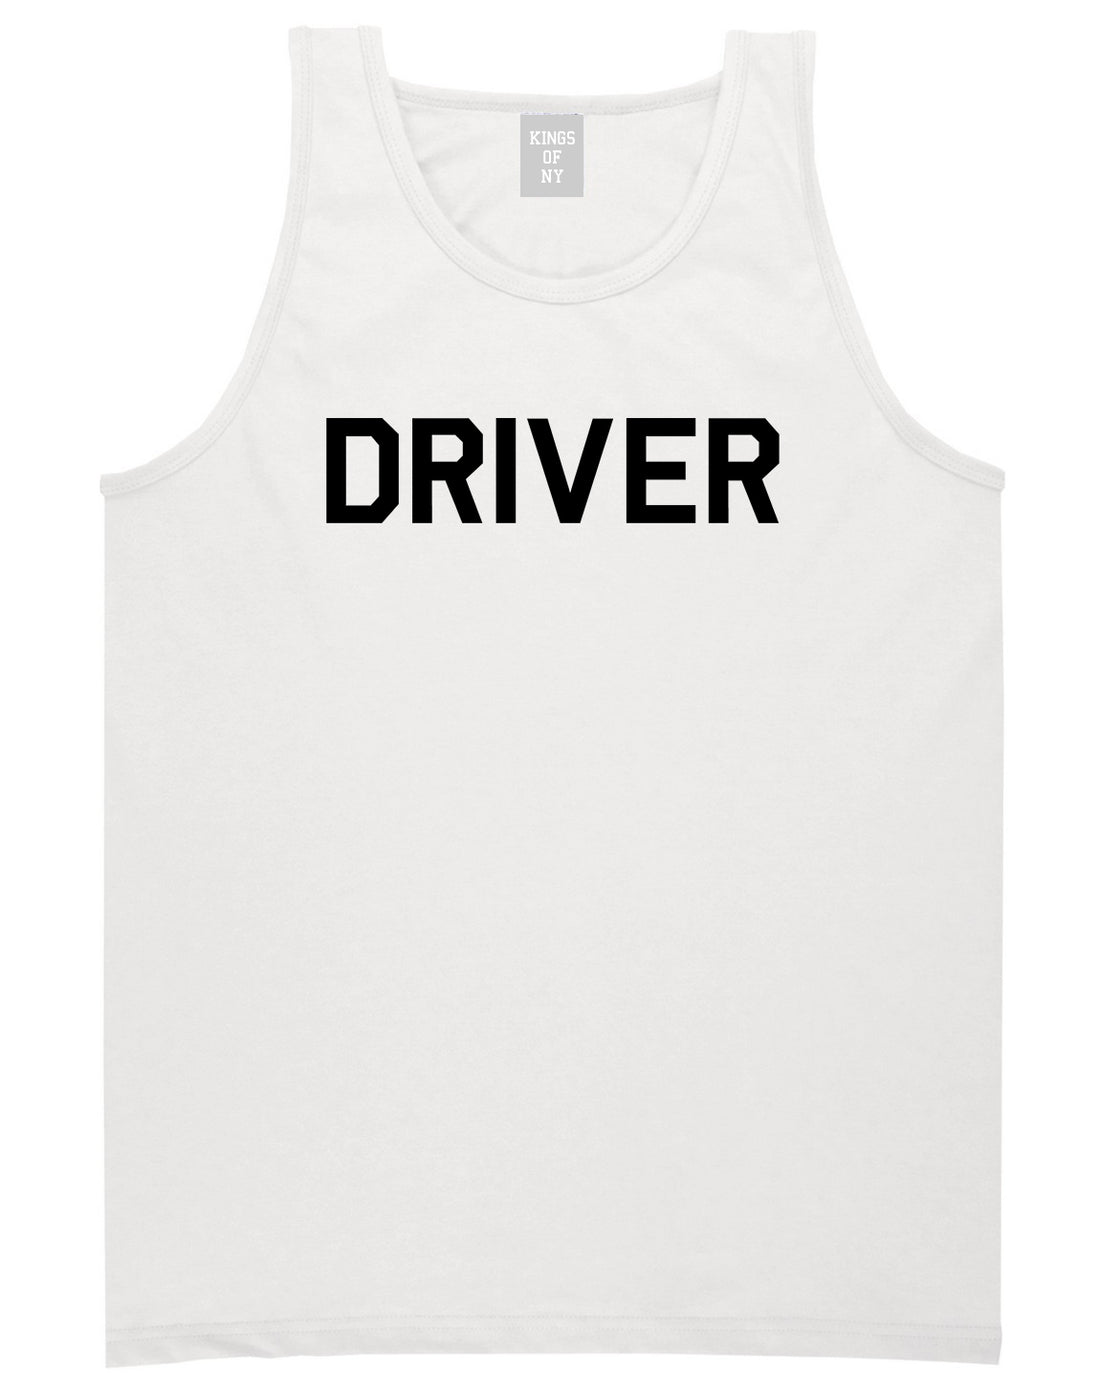 Driver_Drive Mens White Tank Top Shirt by Kings Of NY